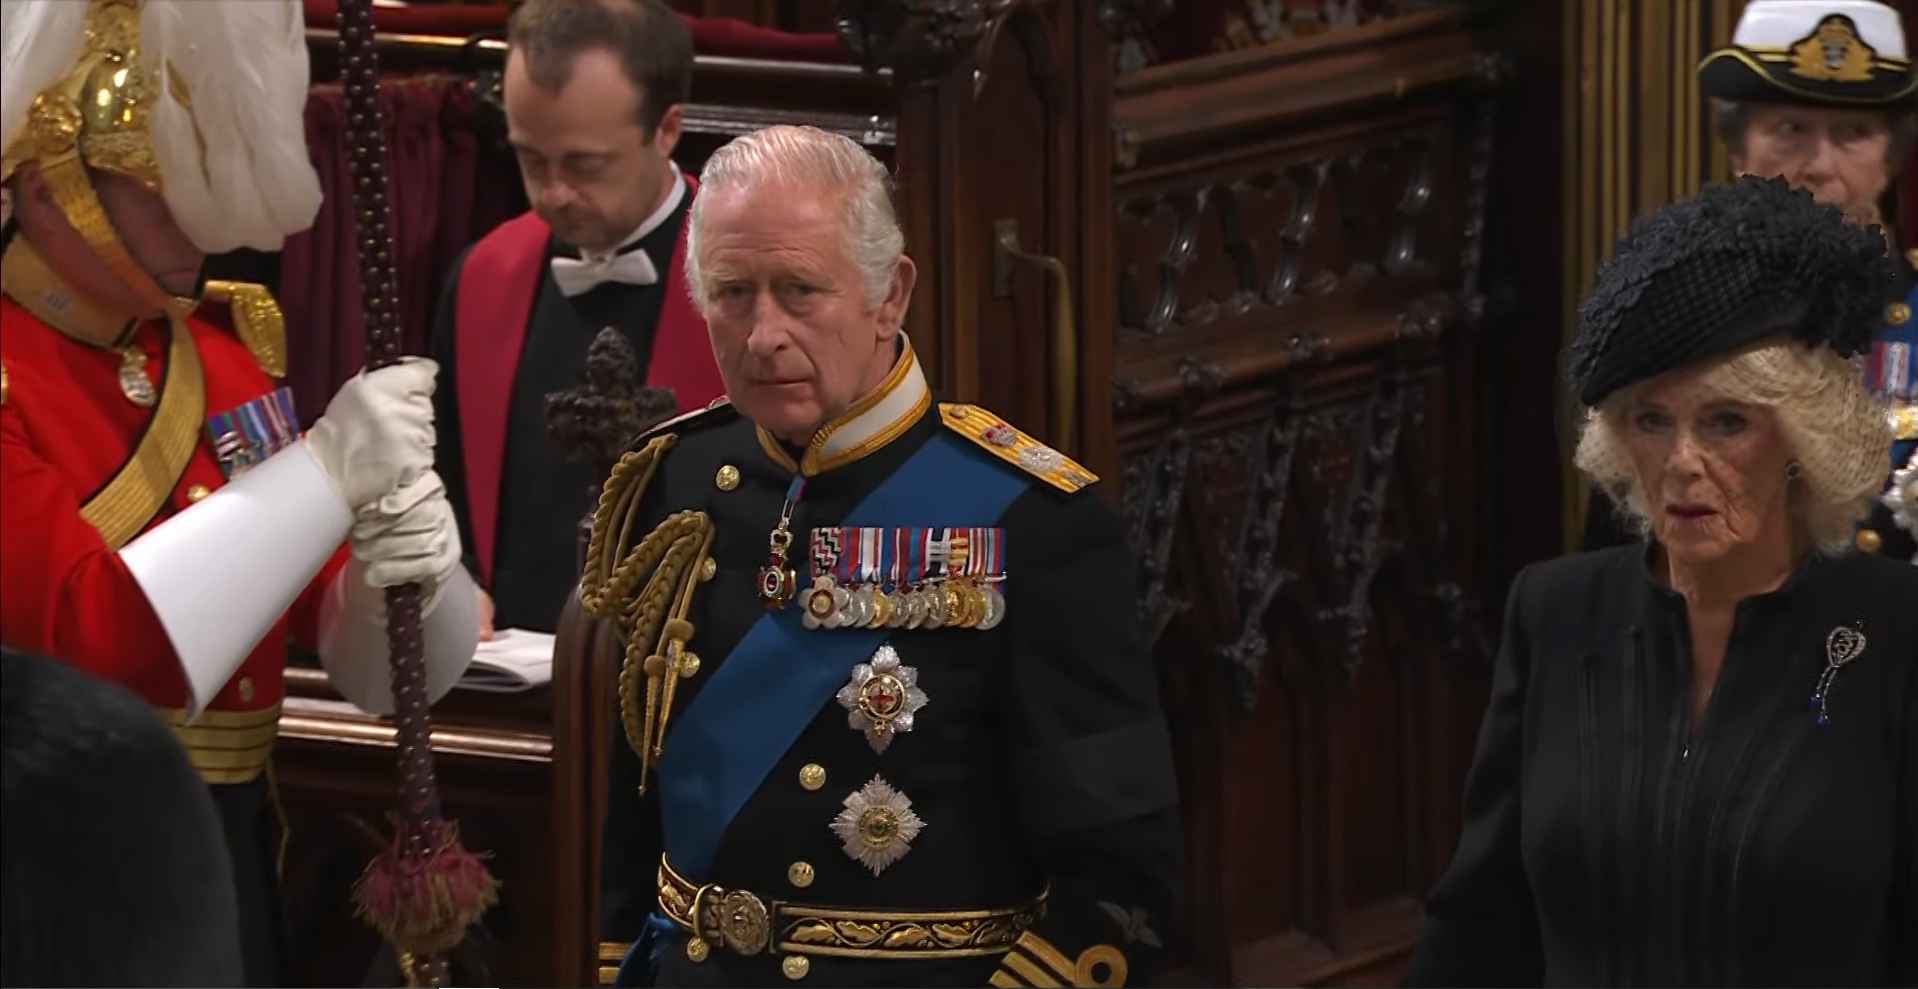 Сахрана Њ.В. Краљице Елизабете II, извор – снимци екрана Sky News-а